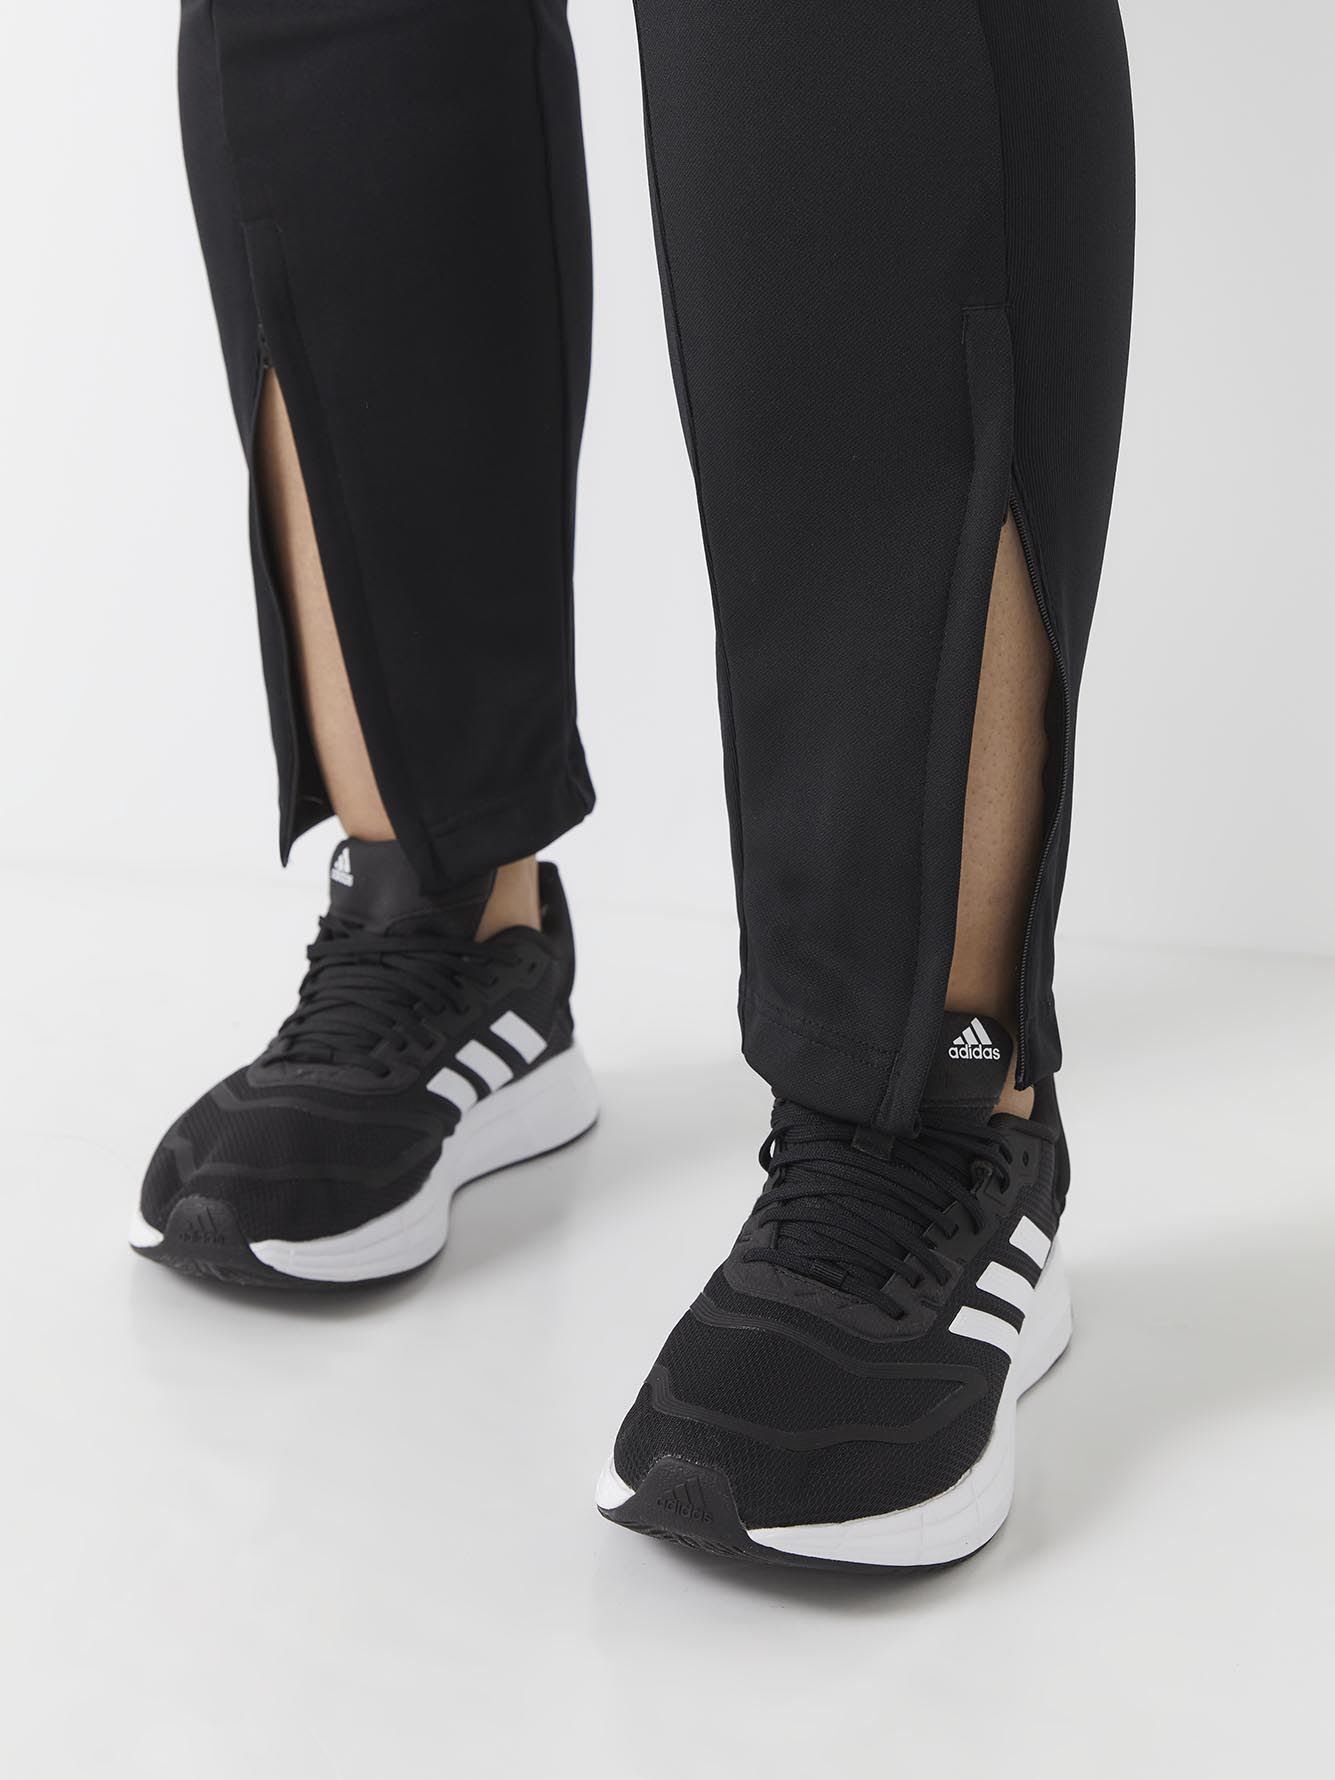 Pantalon de jogging Aeroready Sereno ajusté, tissu responsable - adidas